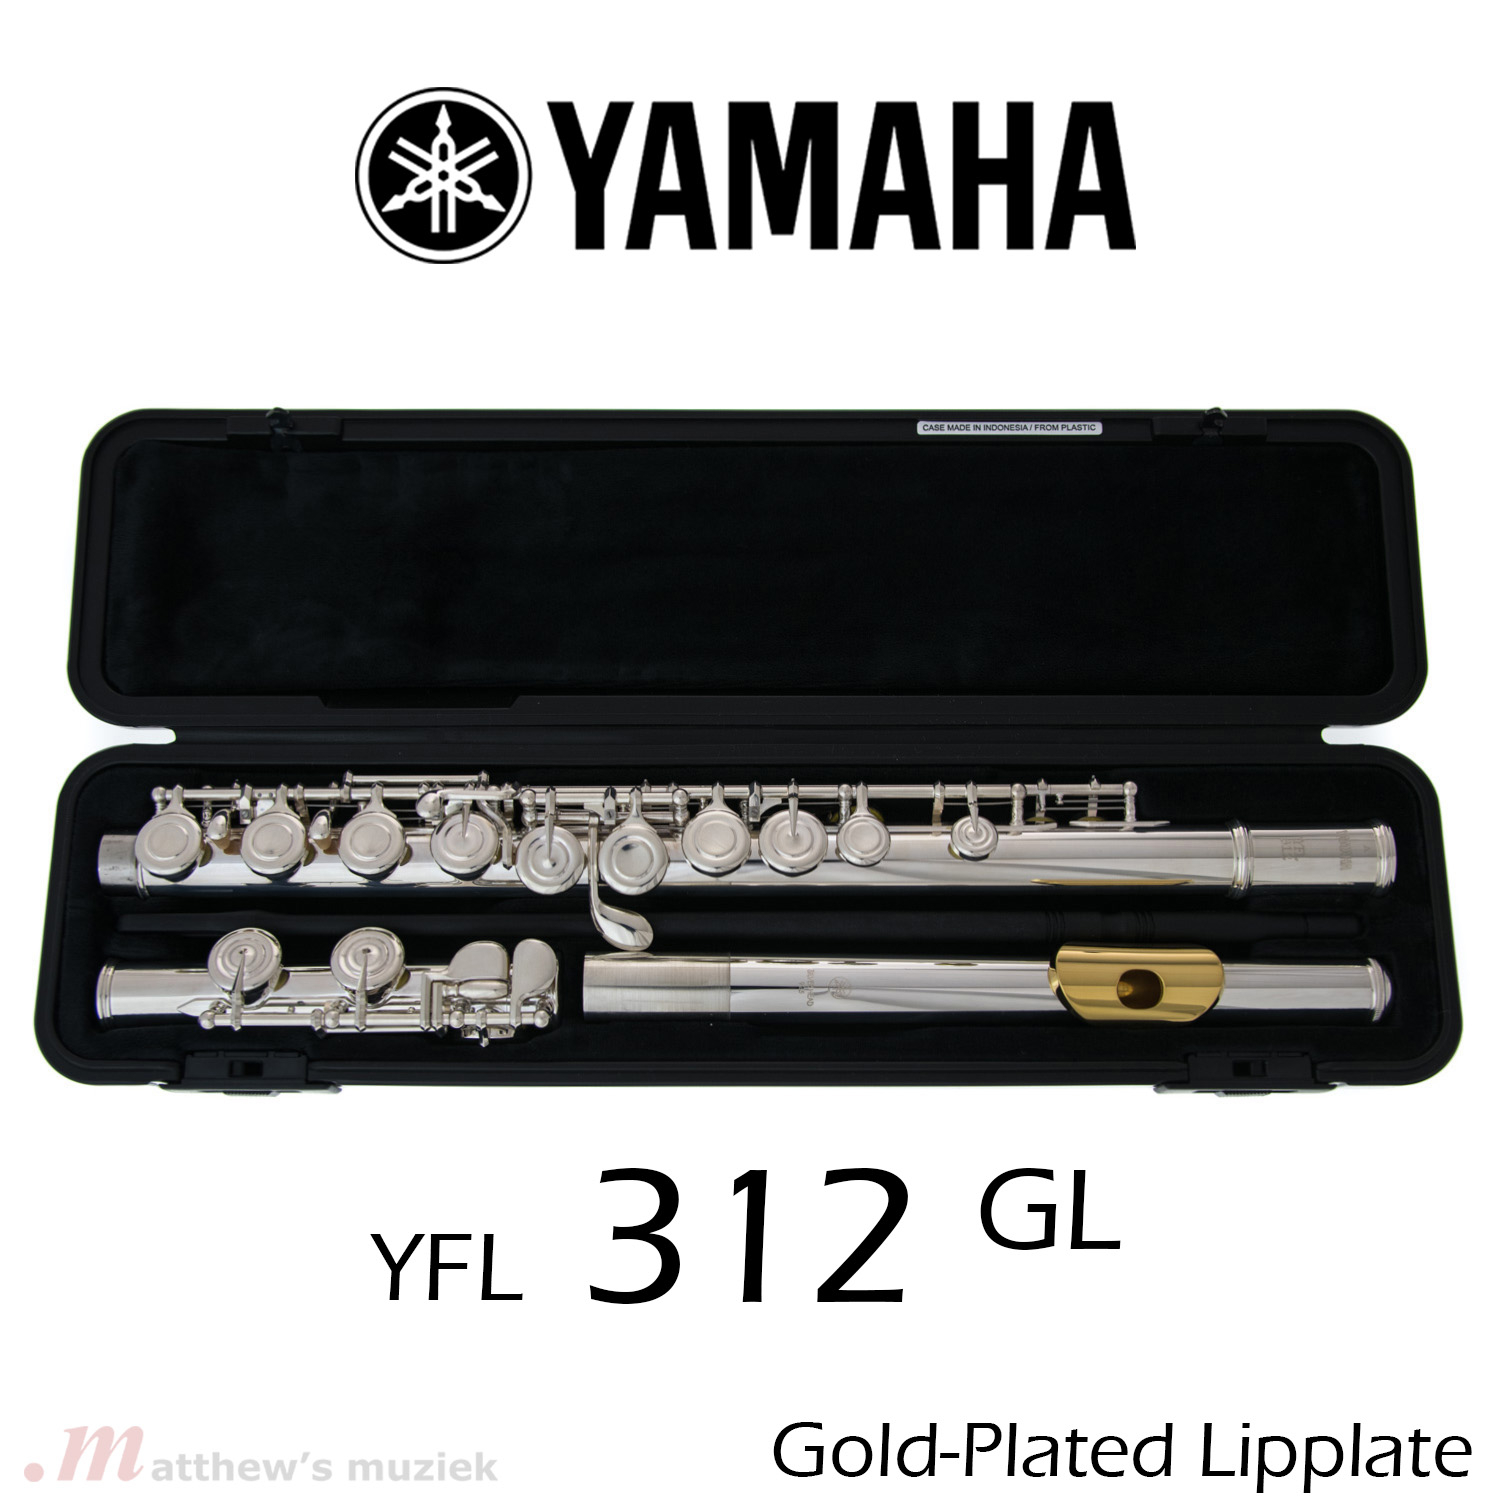 Yamaha Flute - YFL 312 GL